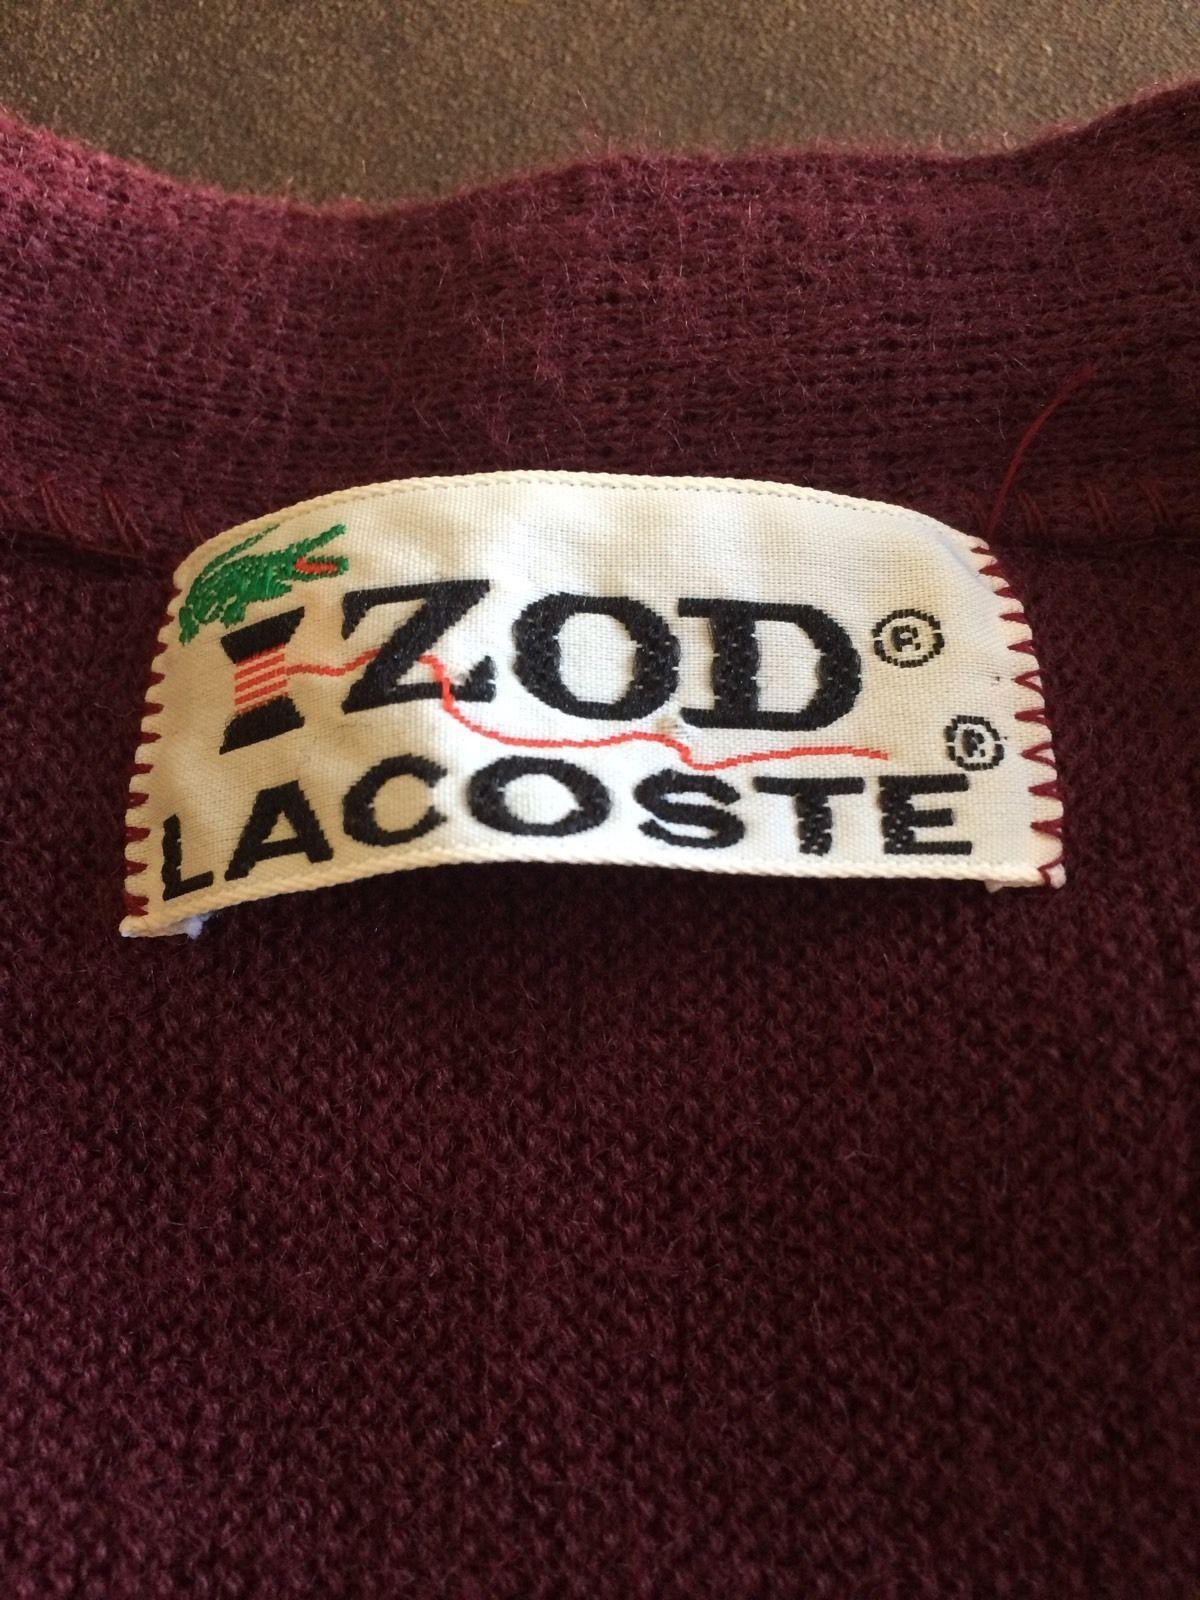 Izod Lacoste Logo - Izod Lacoste Vintage Cardigan With Blue Alligator Logo For Sale ...